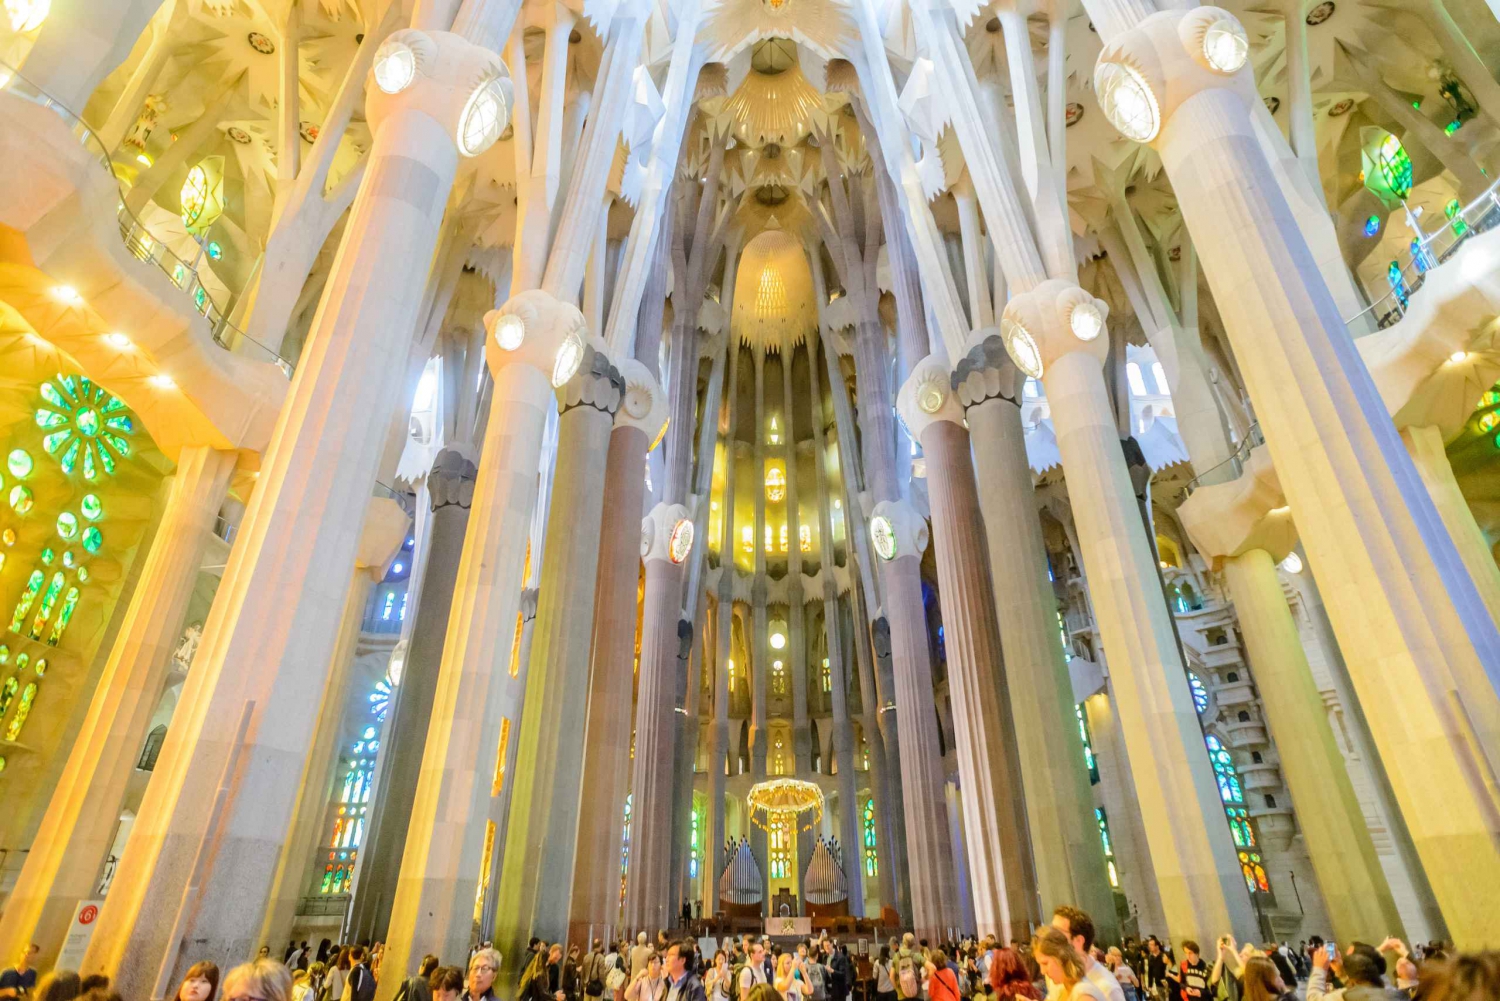 Barcelona: Sagrada Familia Tour & Optional Tower Visit